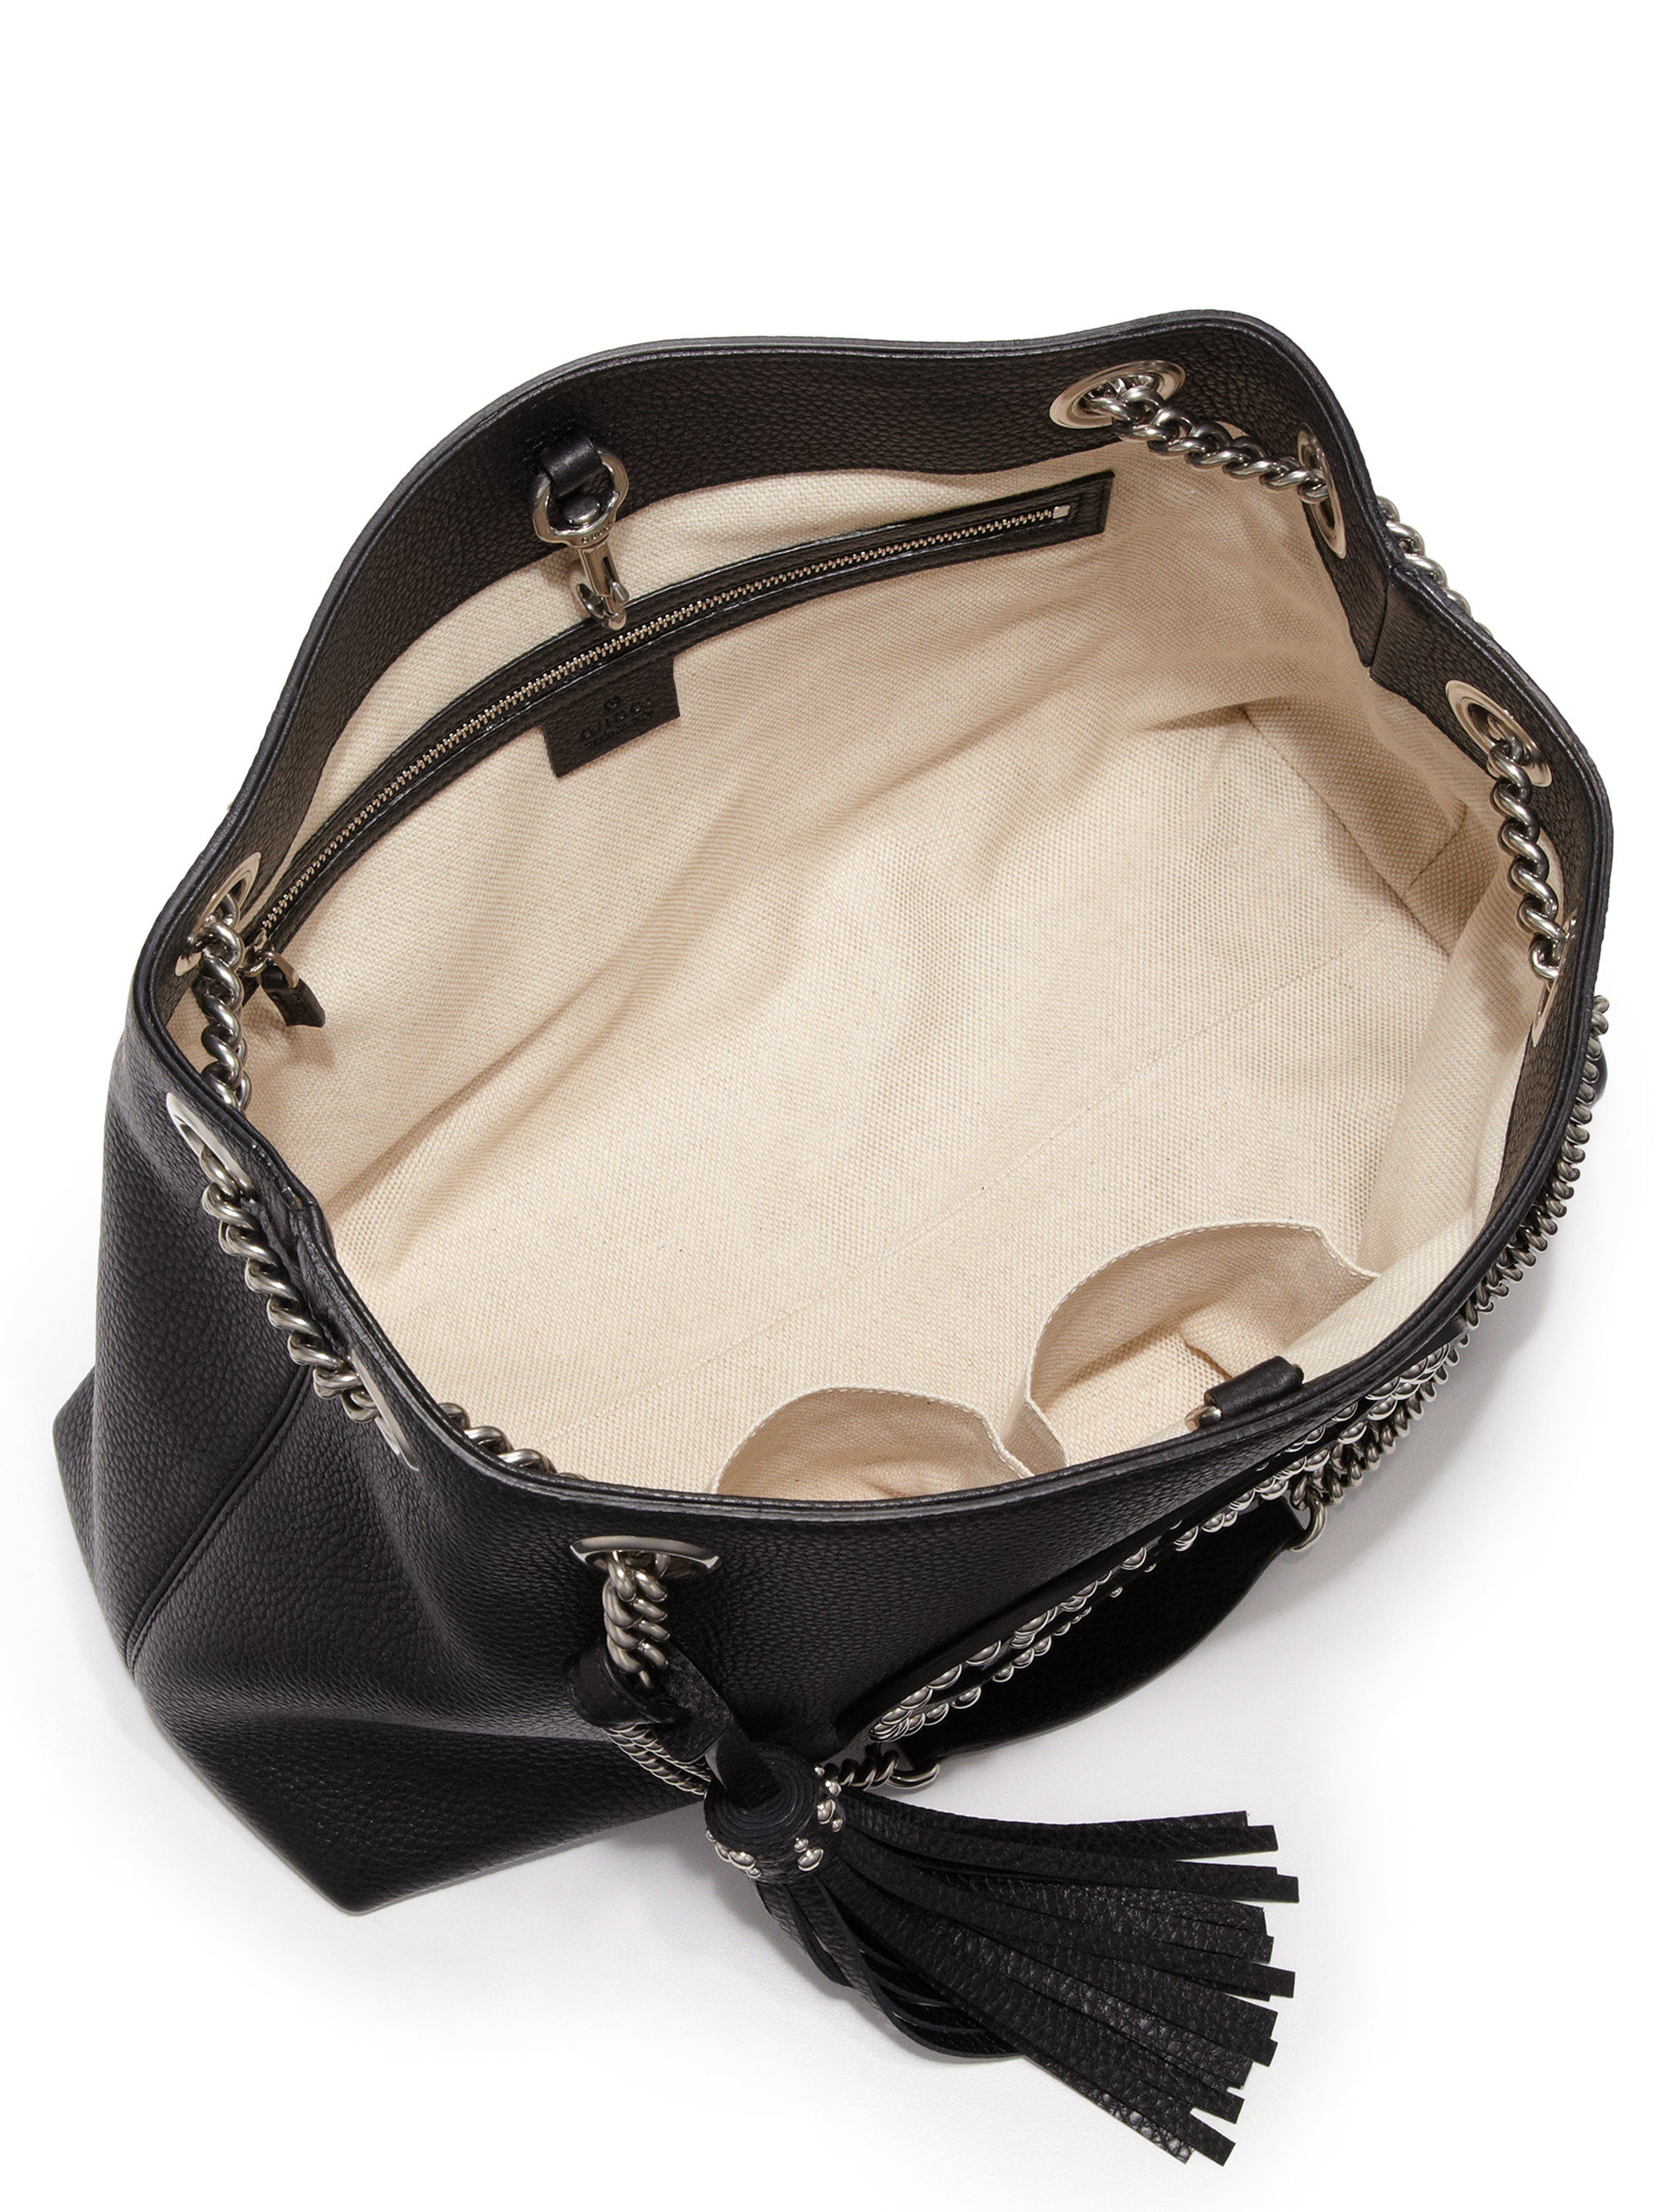 Lyst - Gucci Soho Medium Studded Leather Chain Shoulder Bag in Black